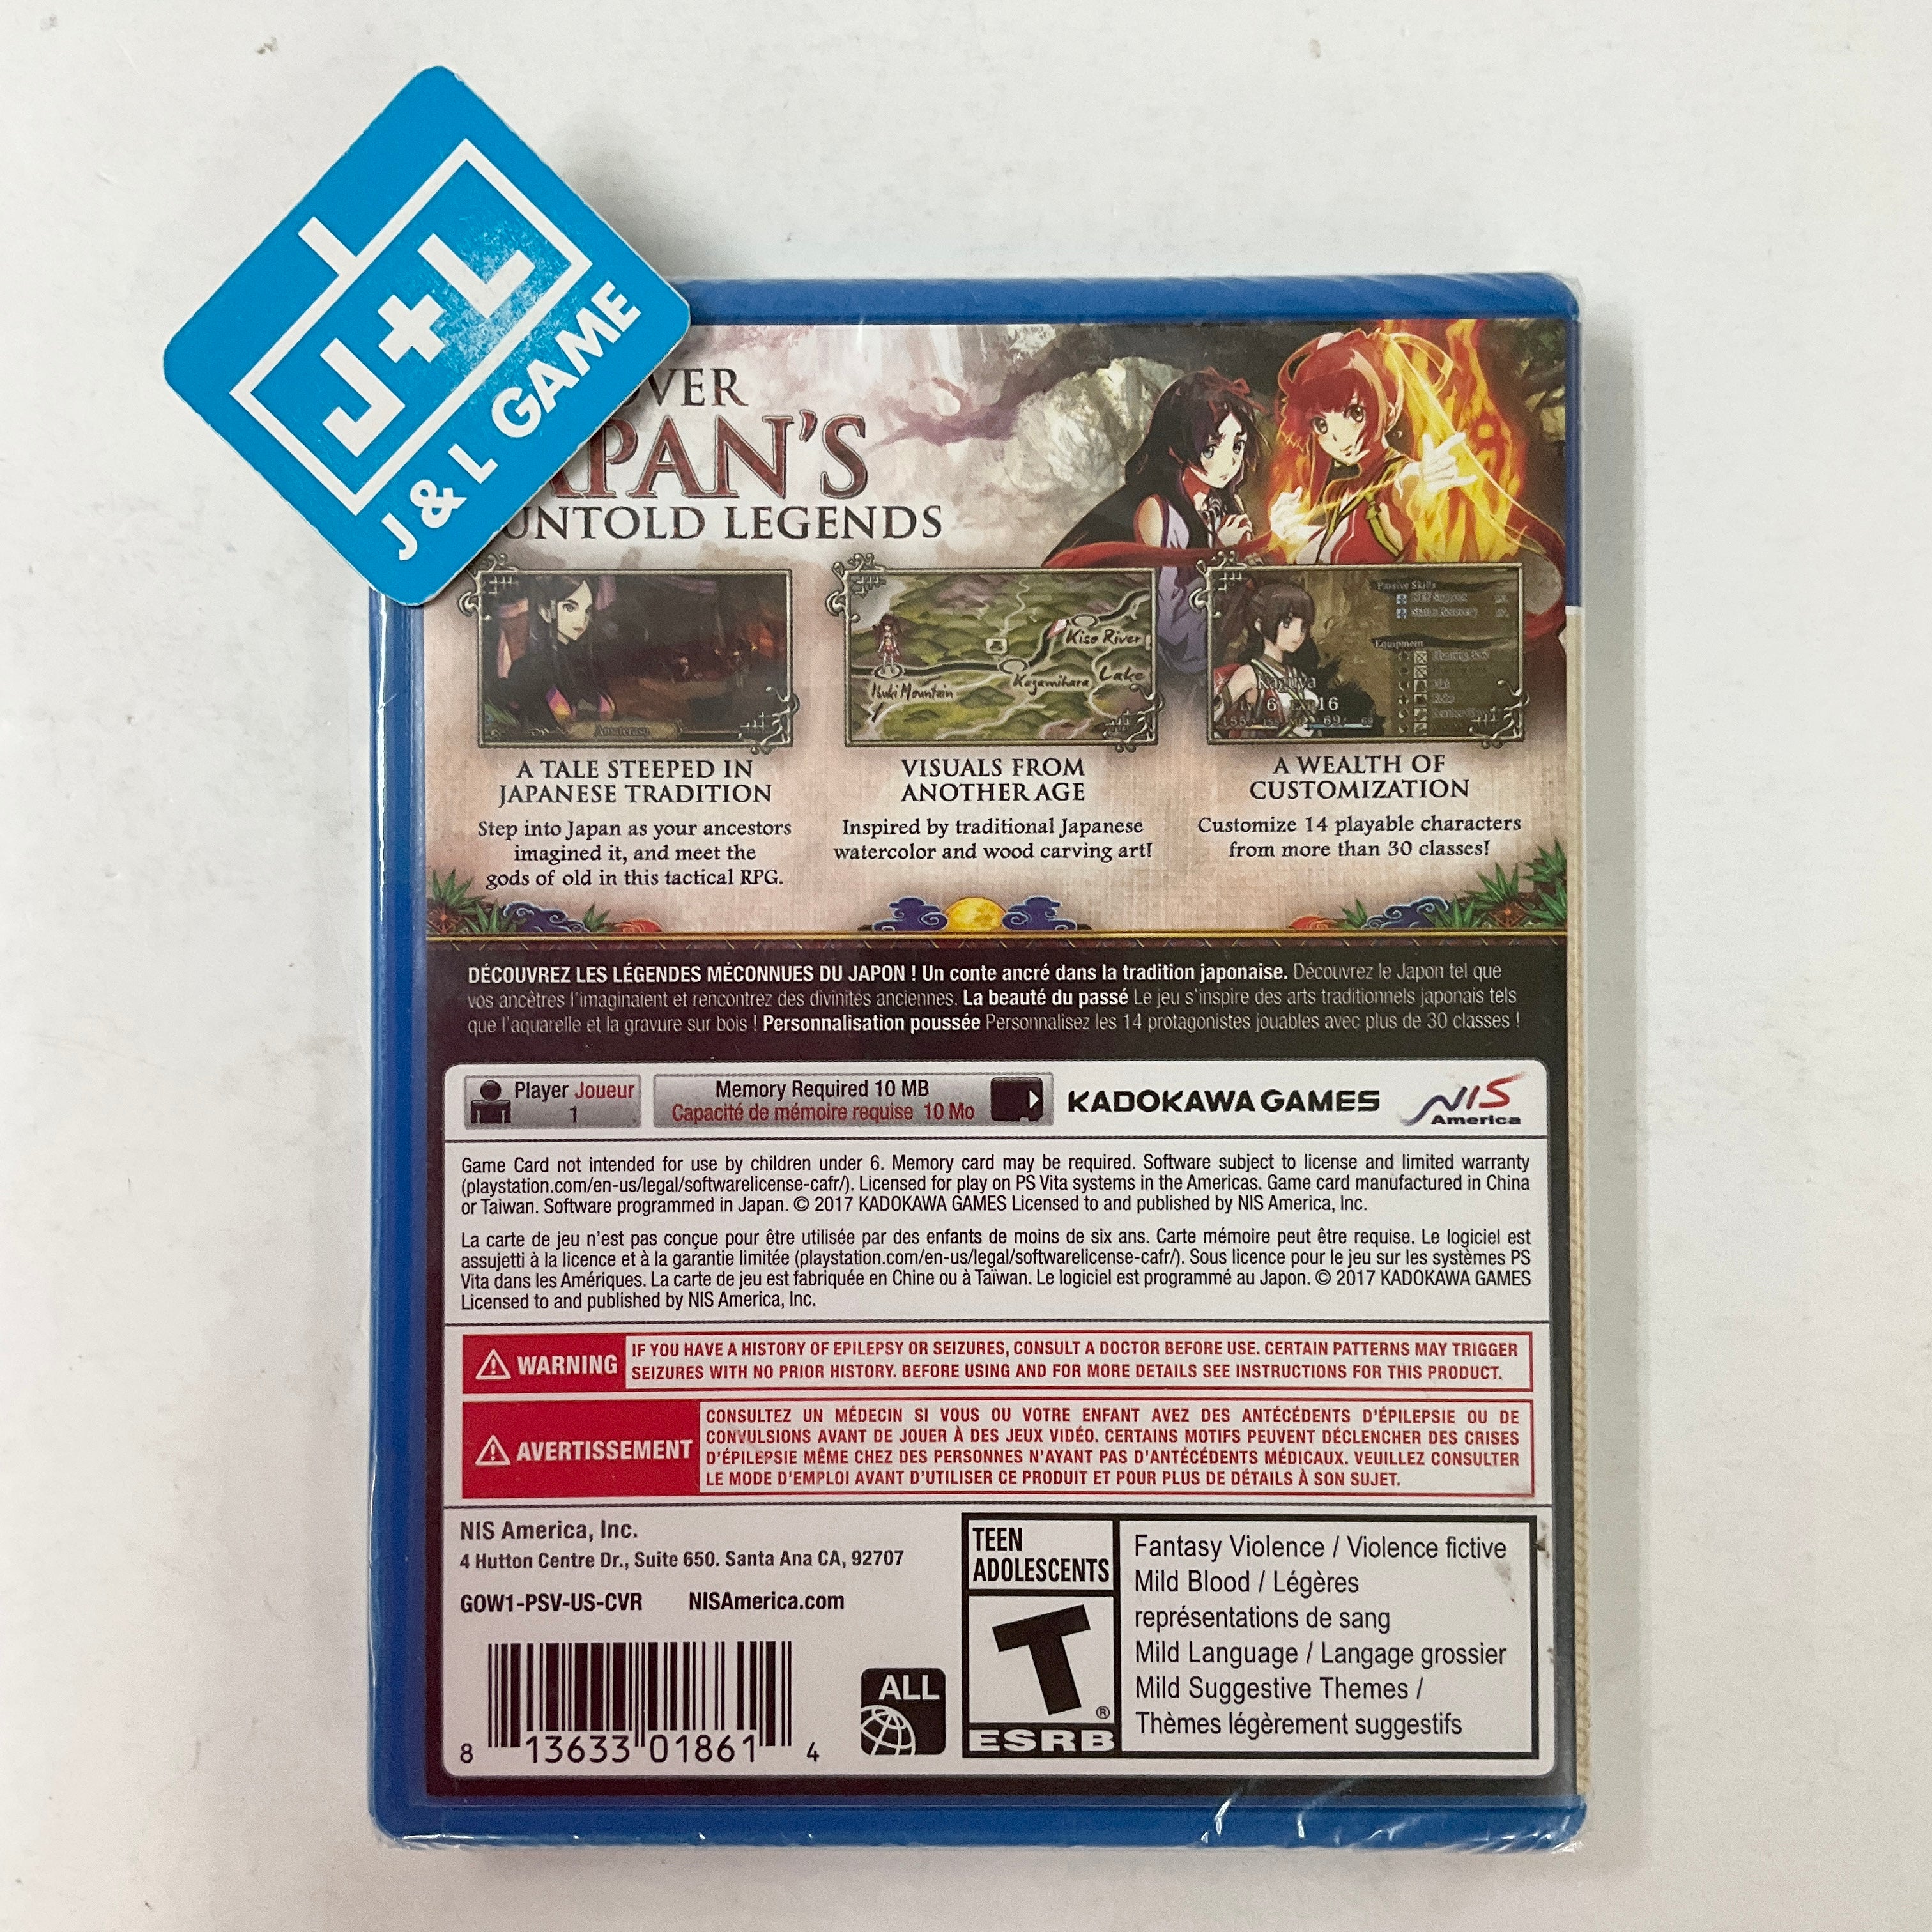 God Wars: Future Past - (PSV) PlayStation Vita Video Games NIS America   